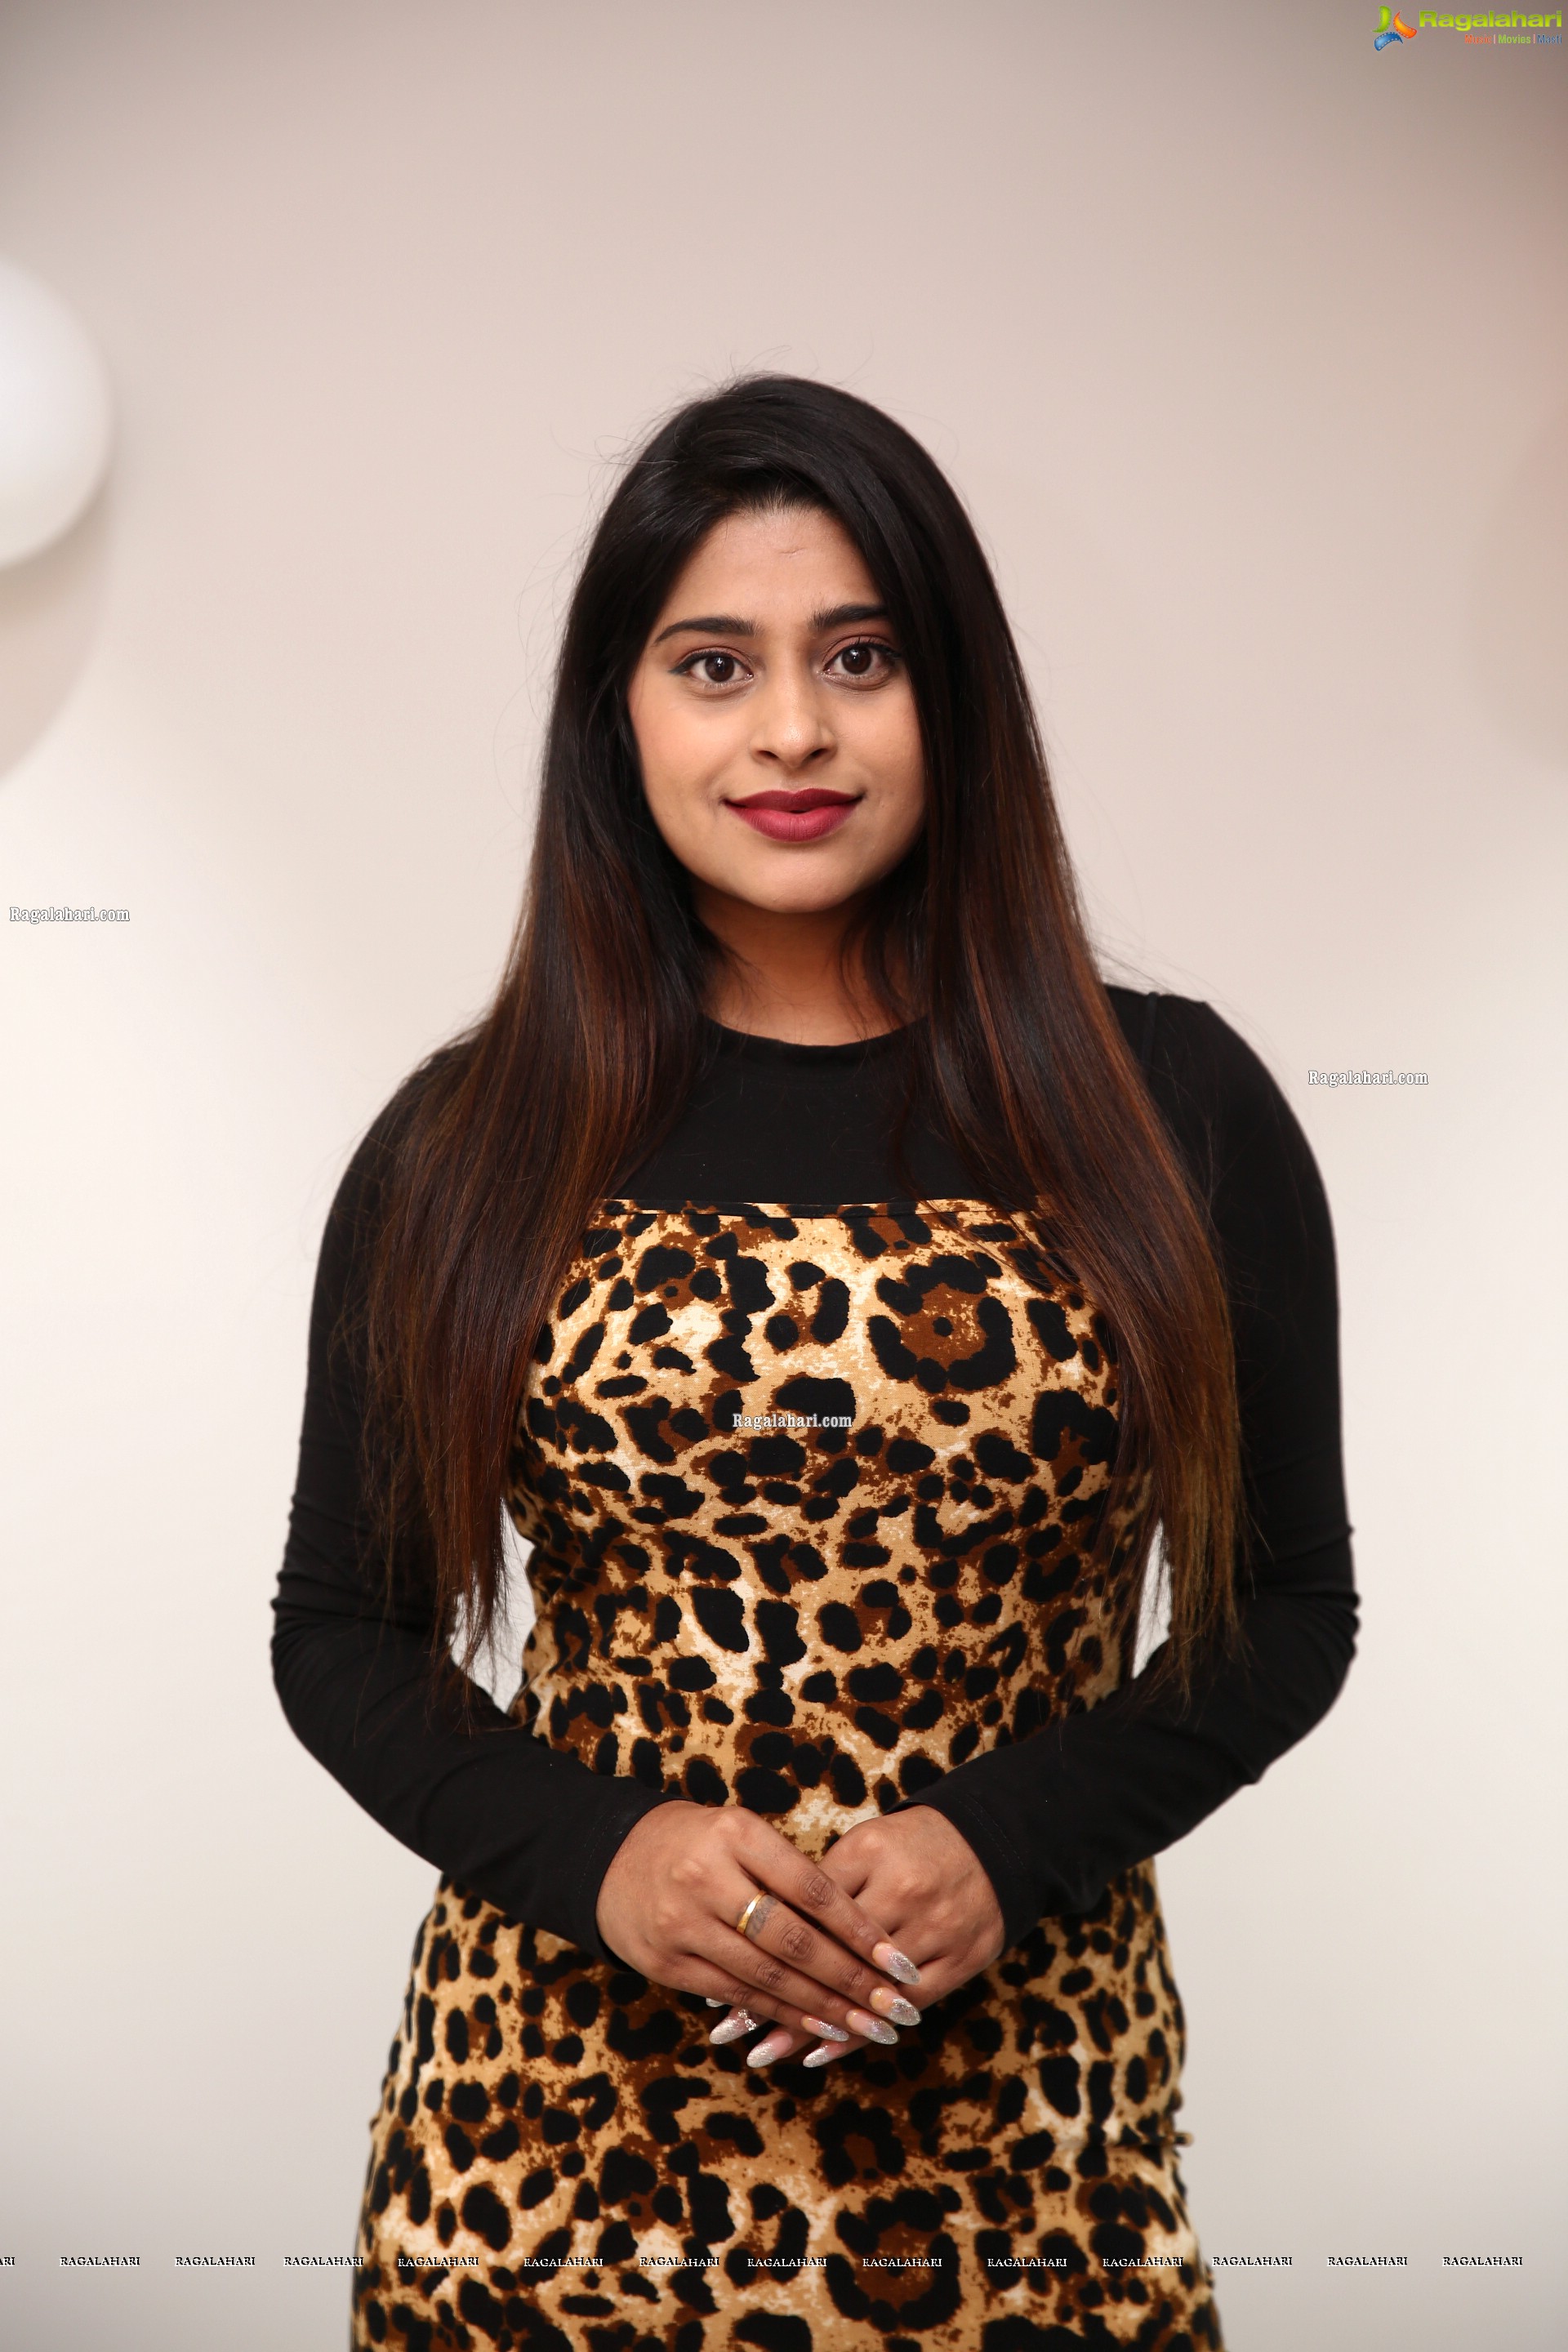 Shravani Varma in Cheetah Print Dress, HD Photo Gallery